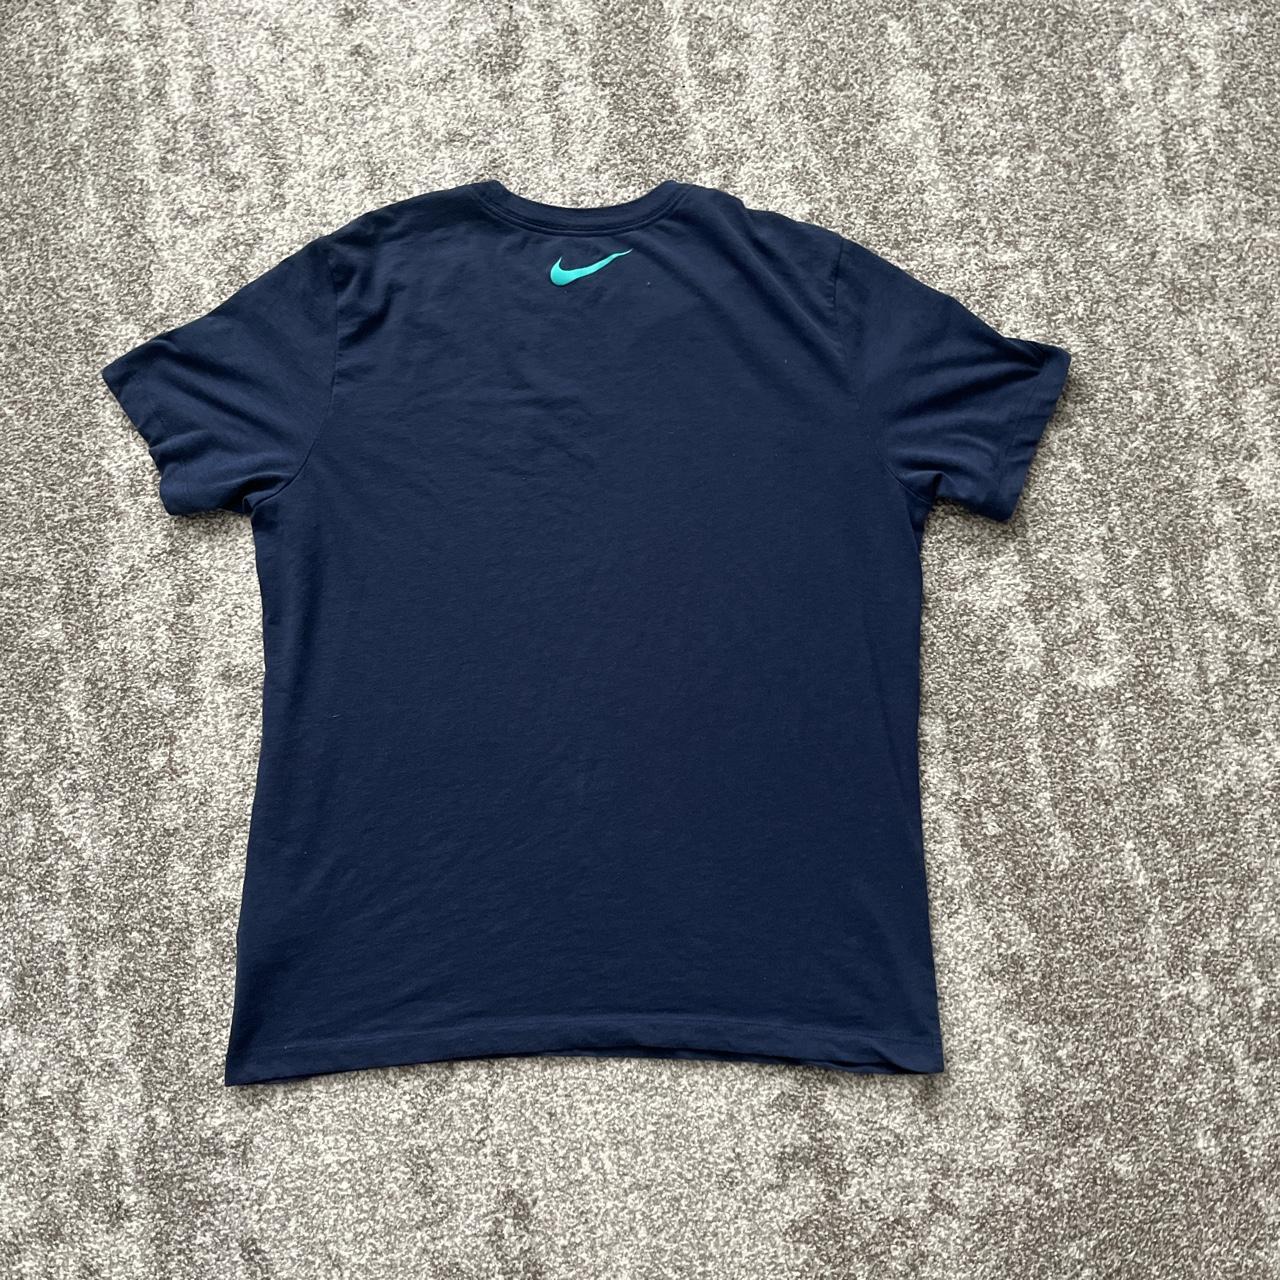 Nike t-shirt Men’s dry fit - Depop